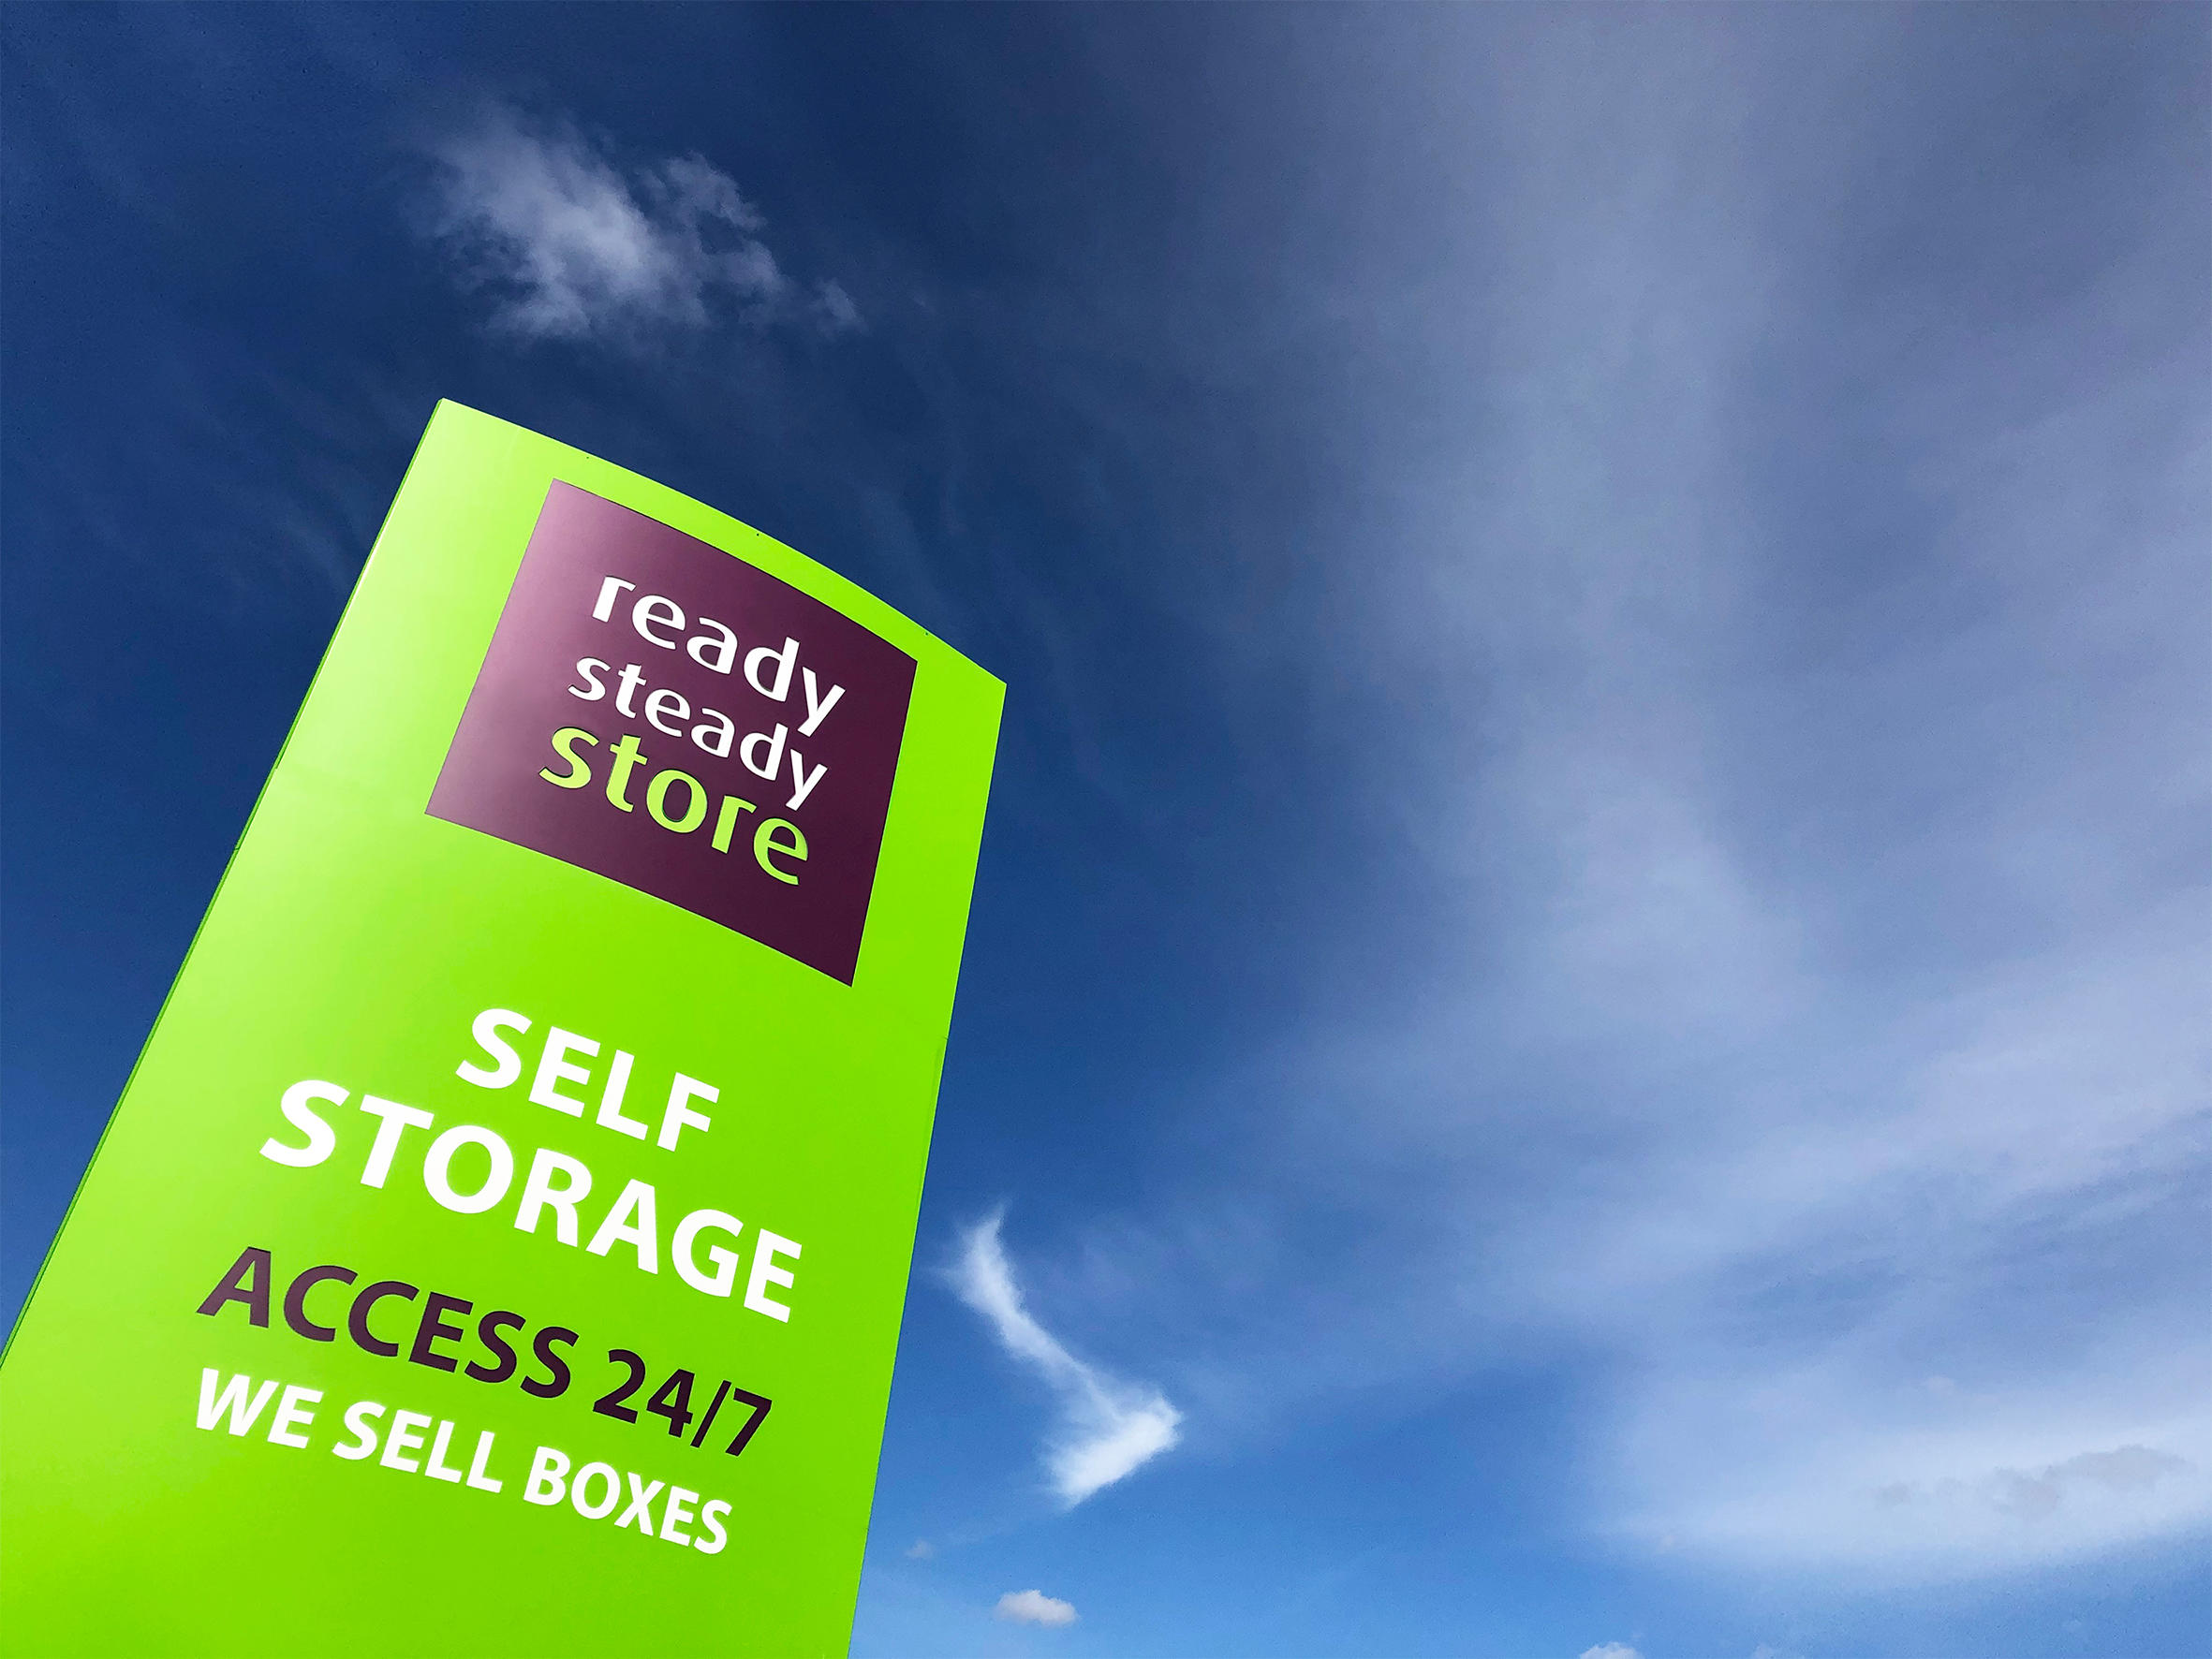 Ready Steady Store Self Storage Leeds Roseville Road Leeds 01132 442080